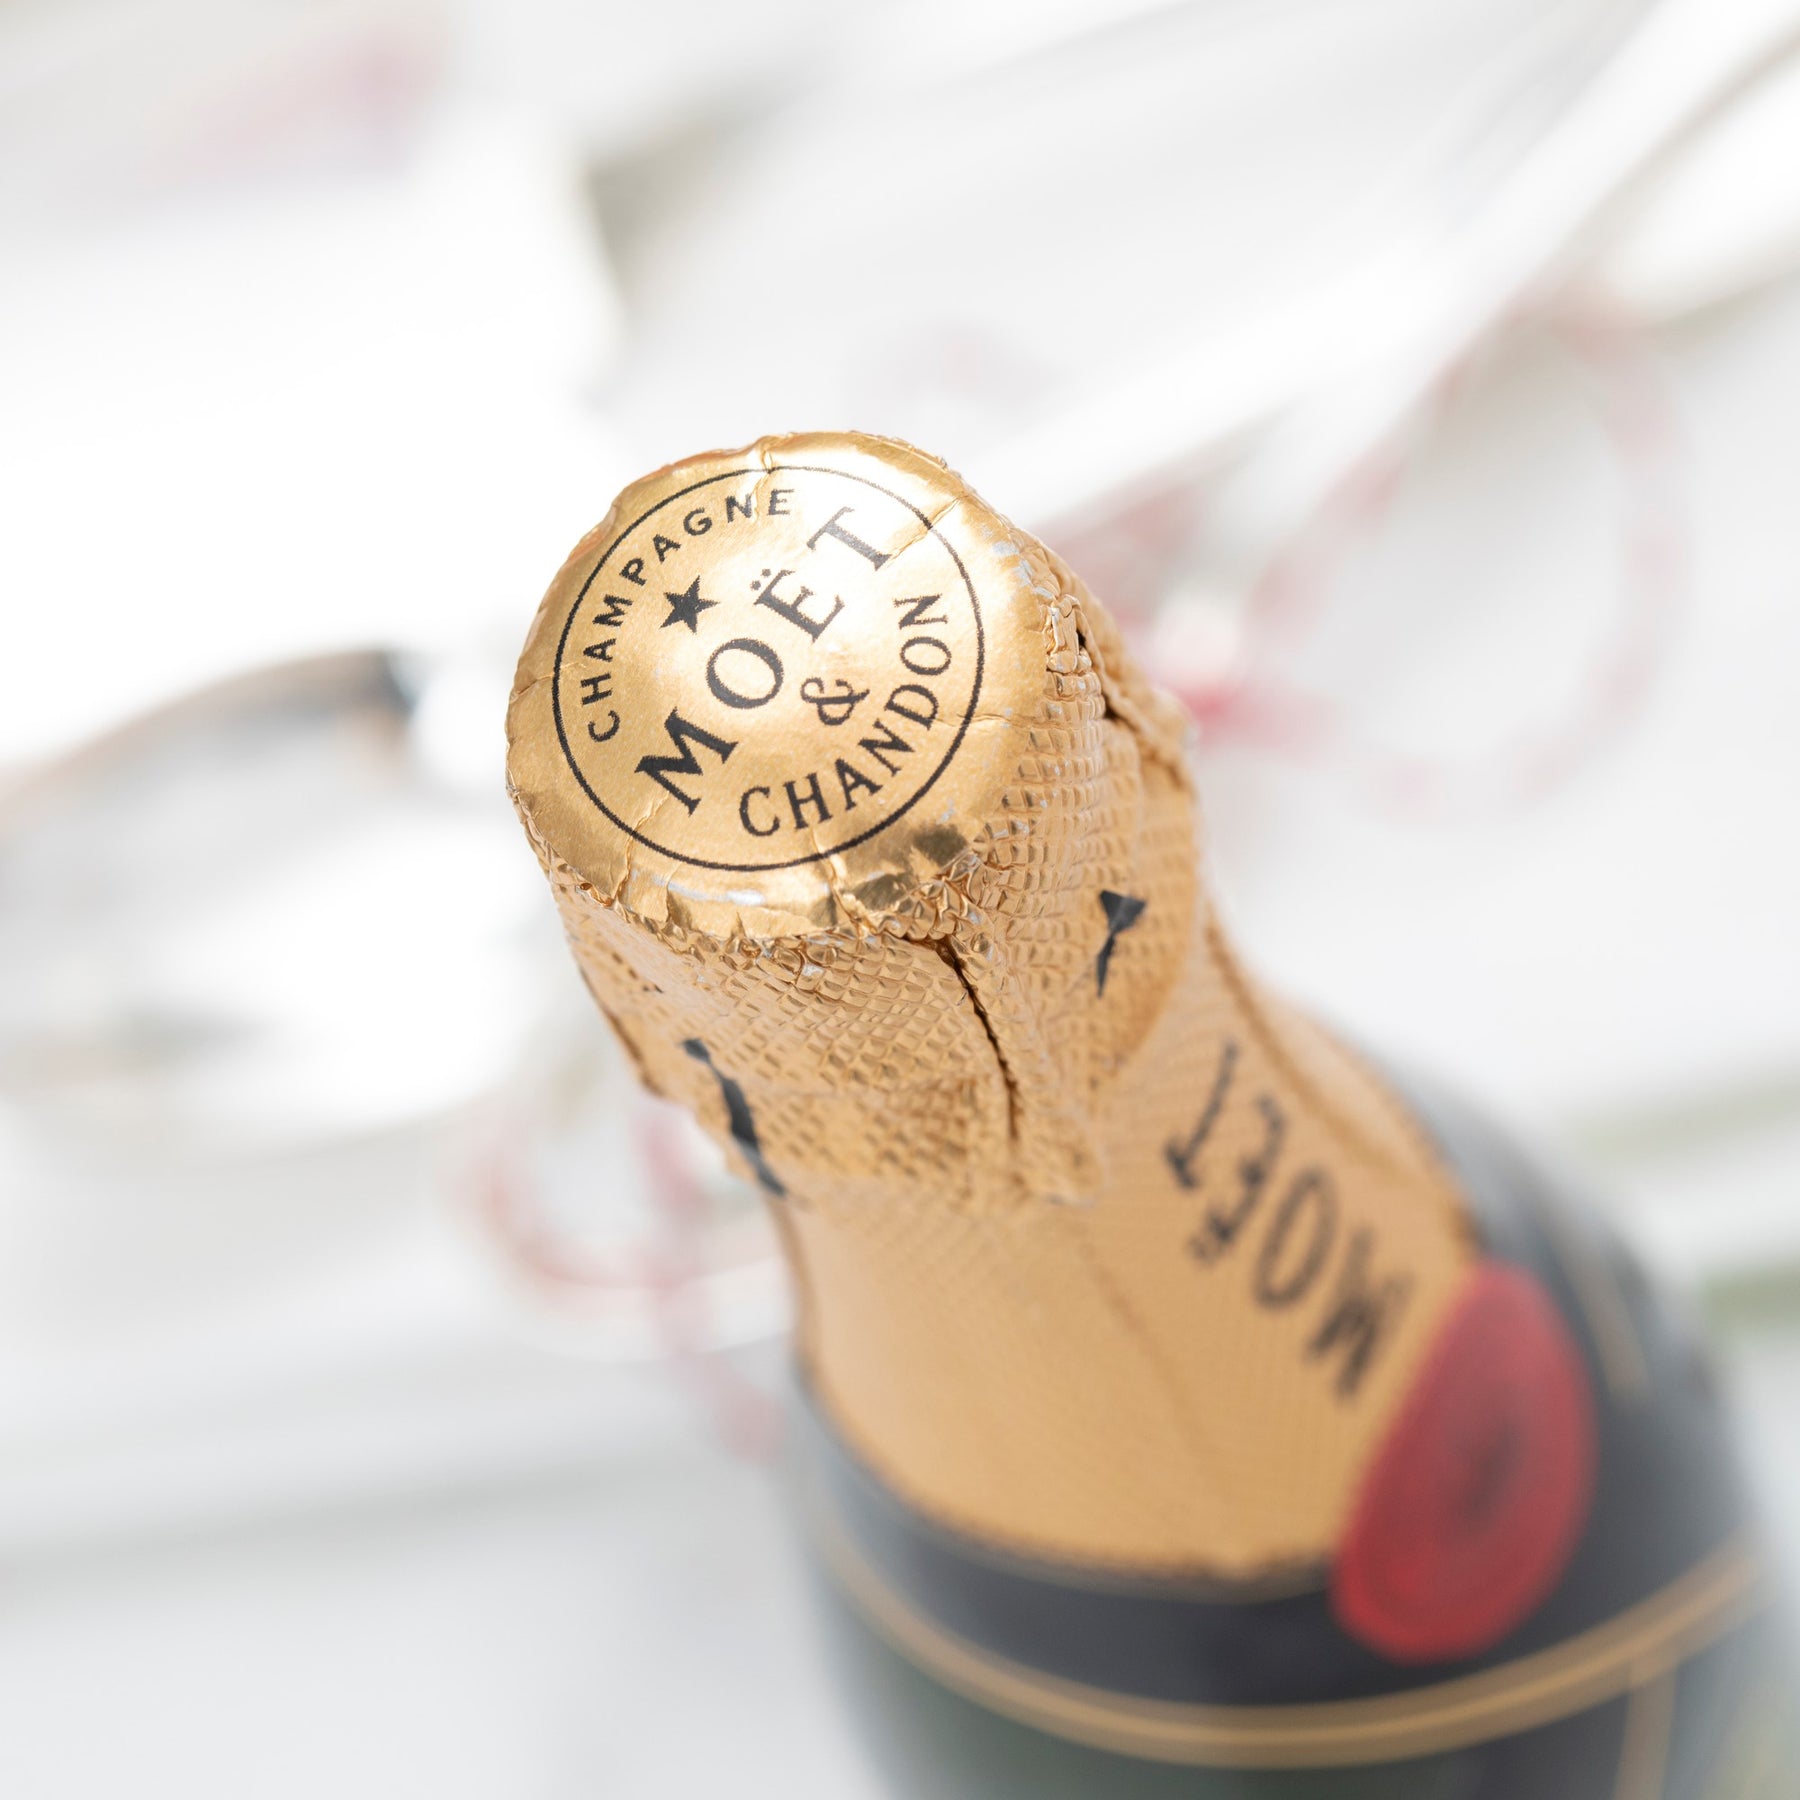 Moët & Chandon - Mini Moet Champagne (200ml) – Sophia Flowerbox